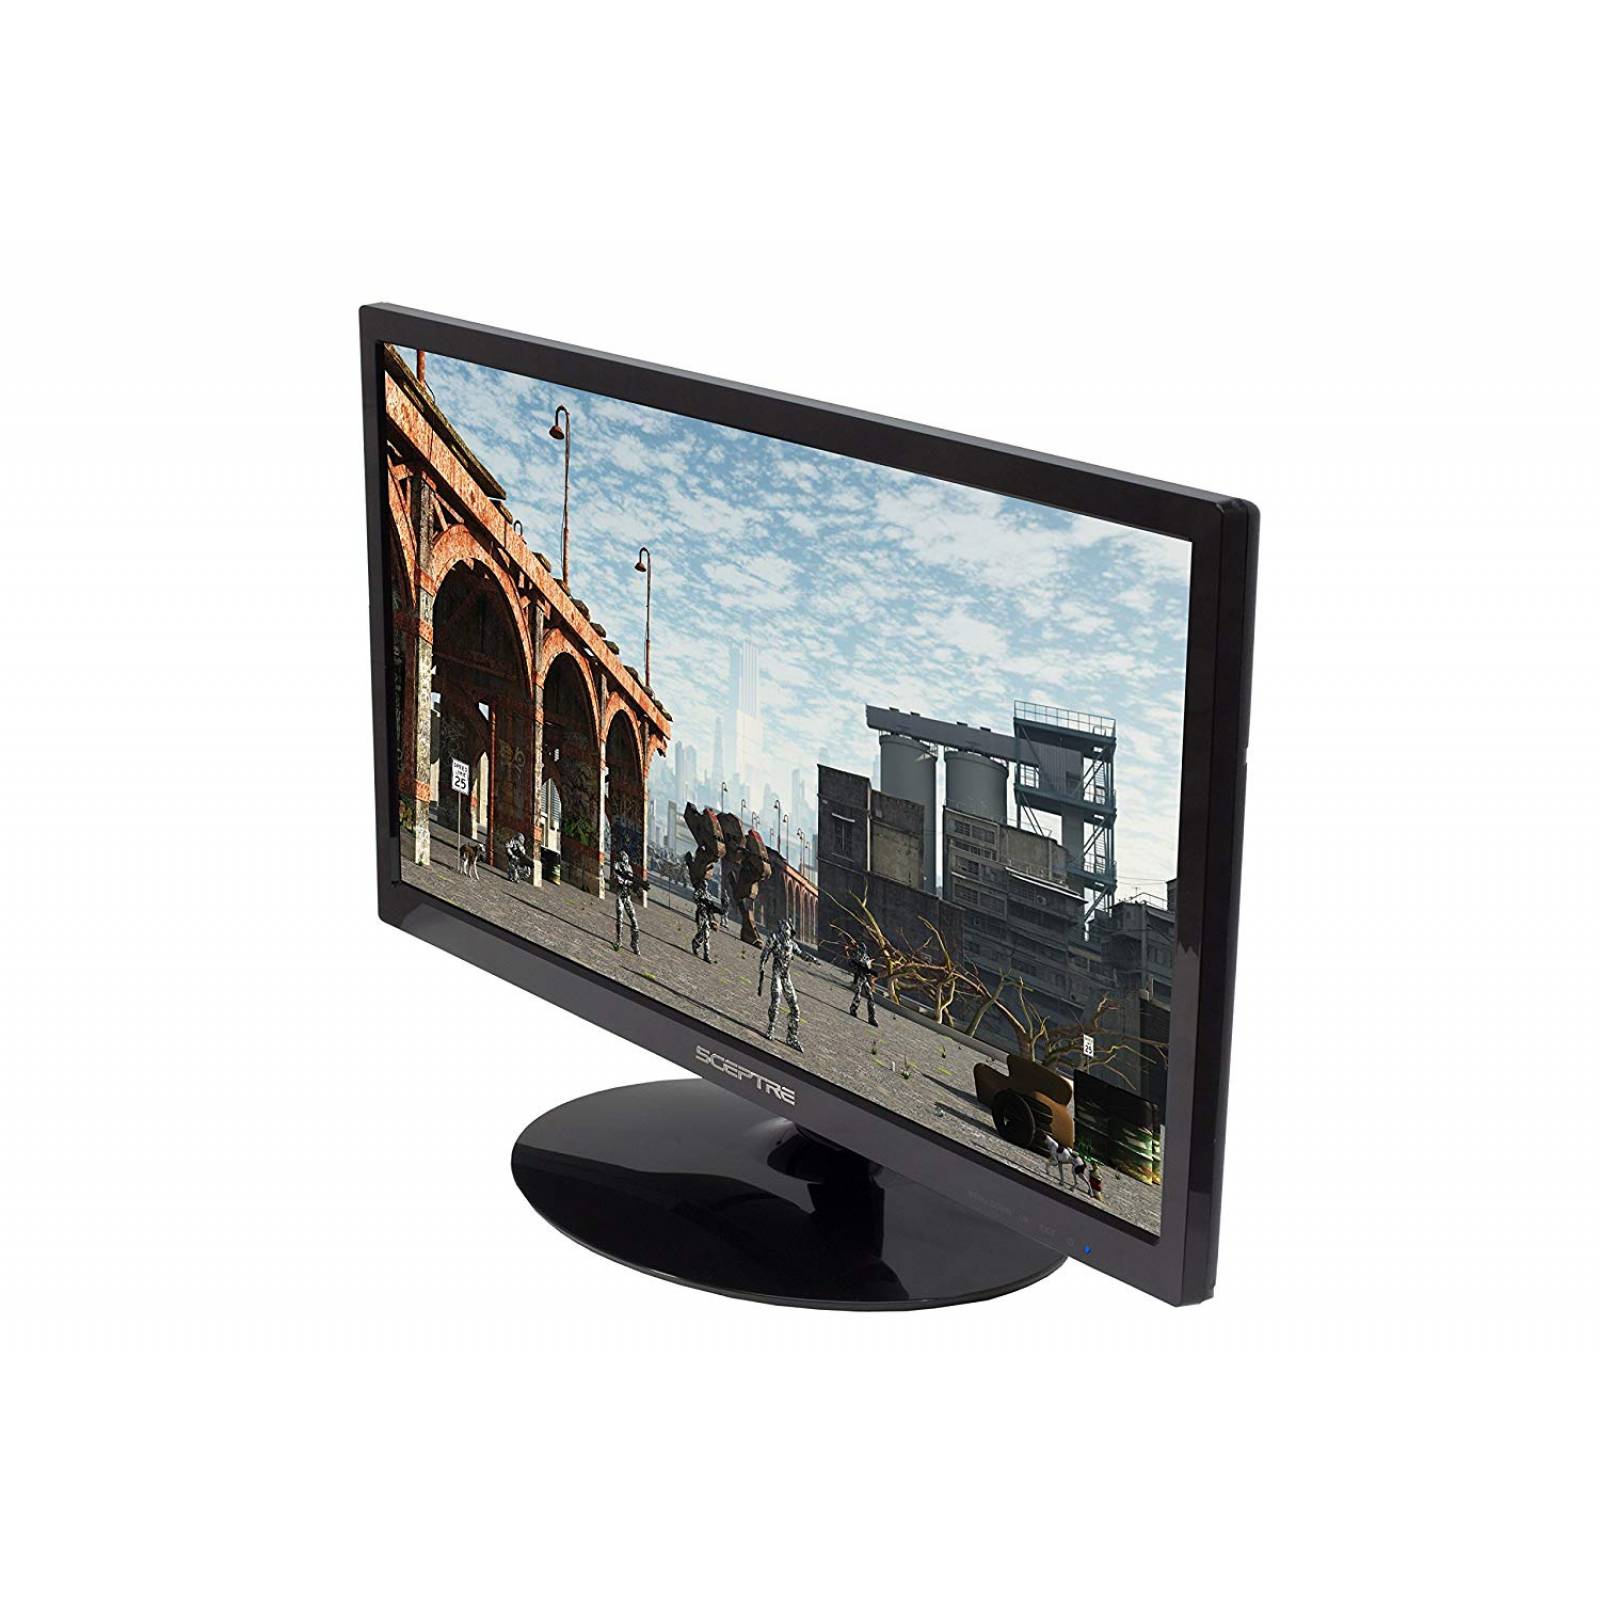 Monitor Sceptre Serie E E205w-1600 V1 20  Led 1600x900